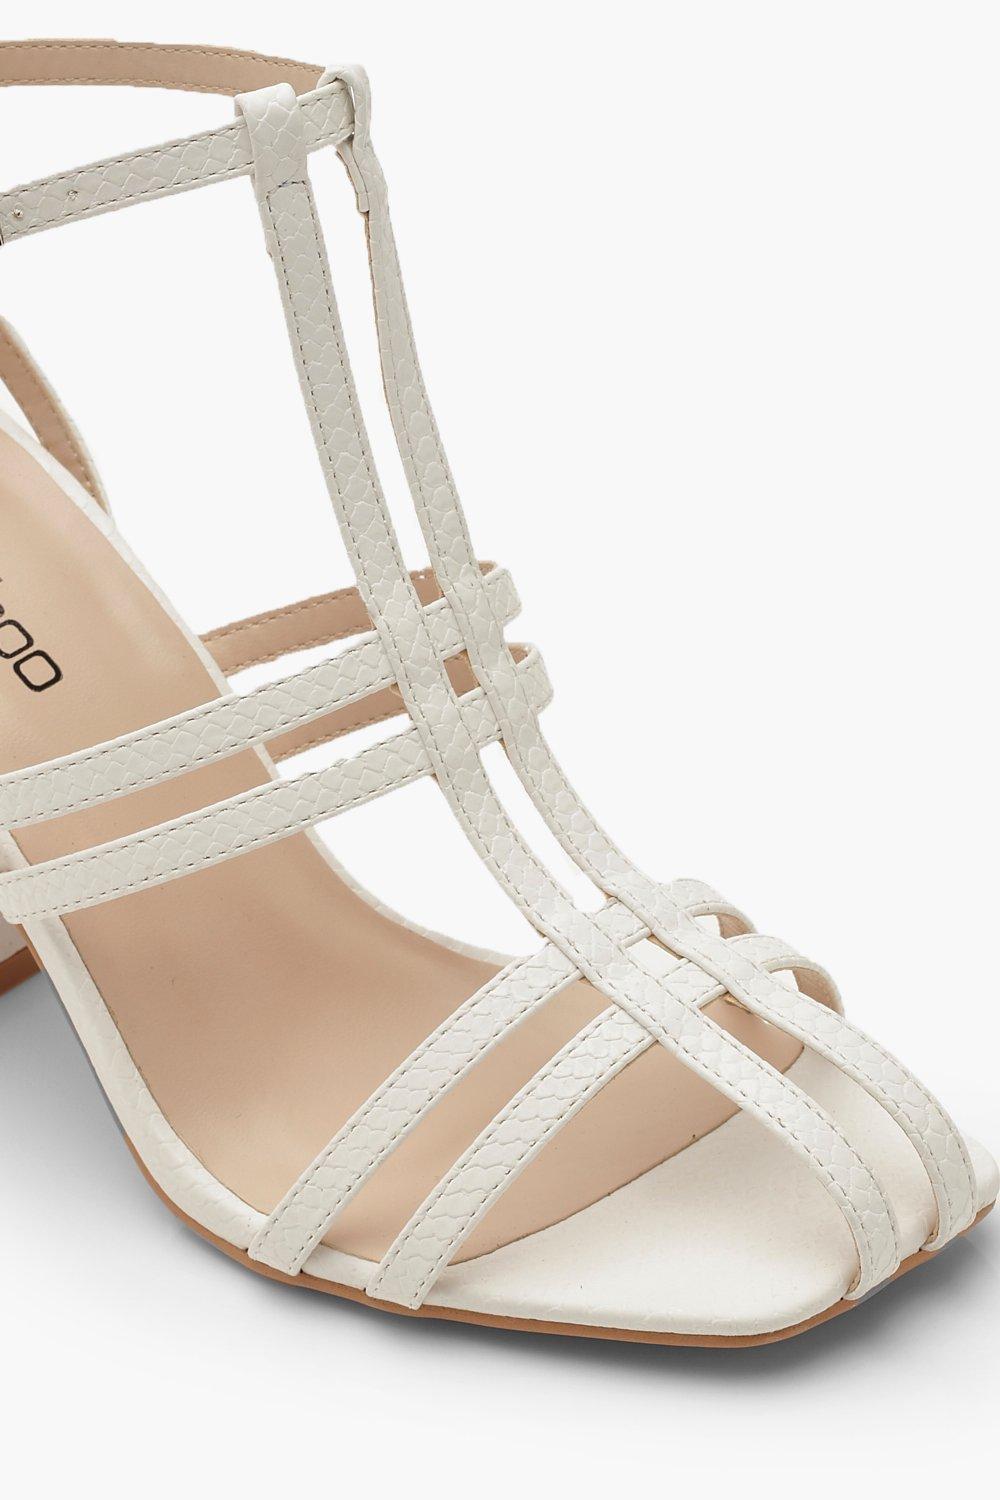 T-strap Cage High Heels Sandals Women Design Feminine Elegant